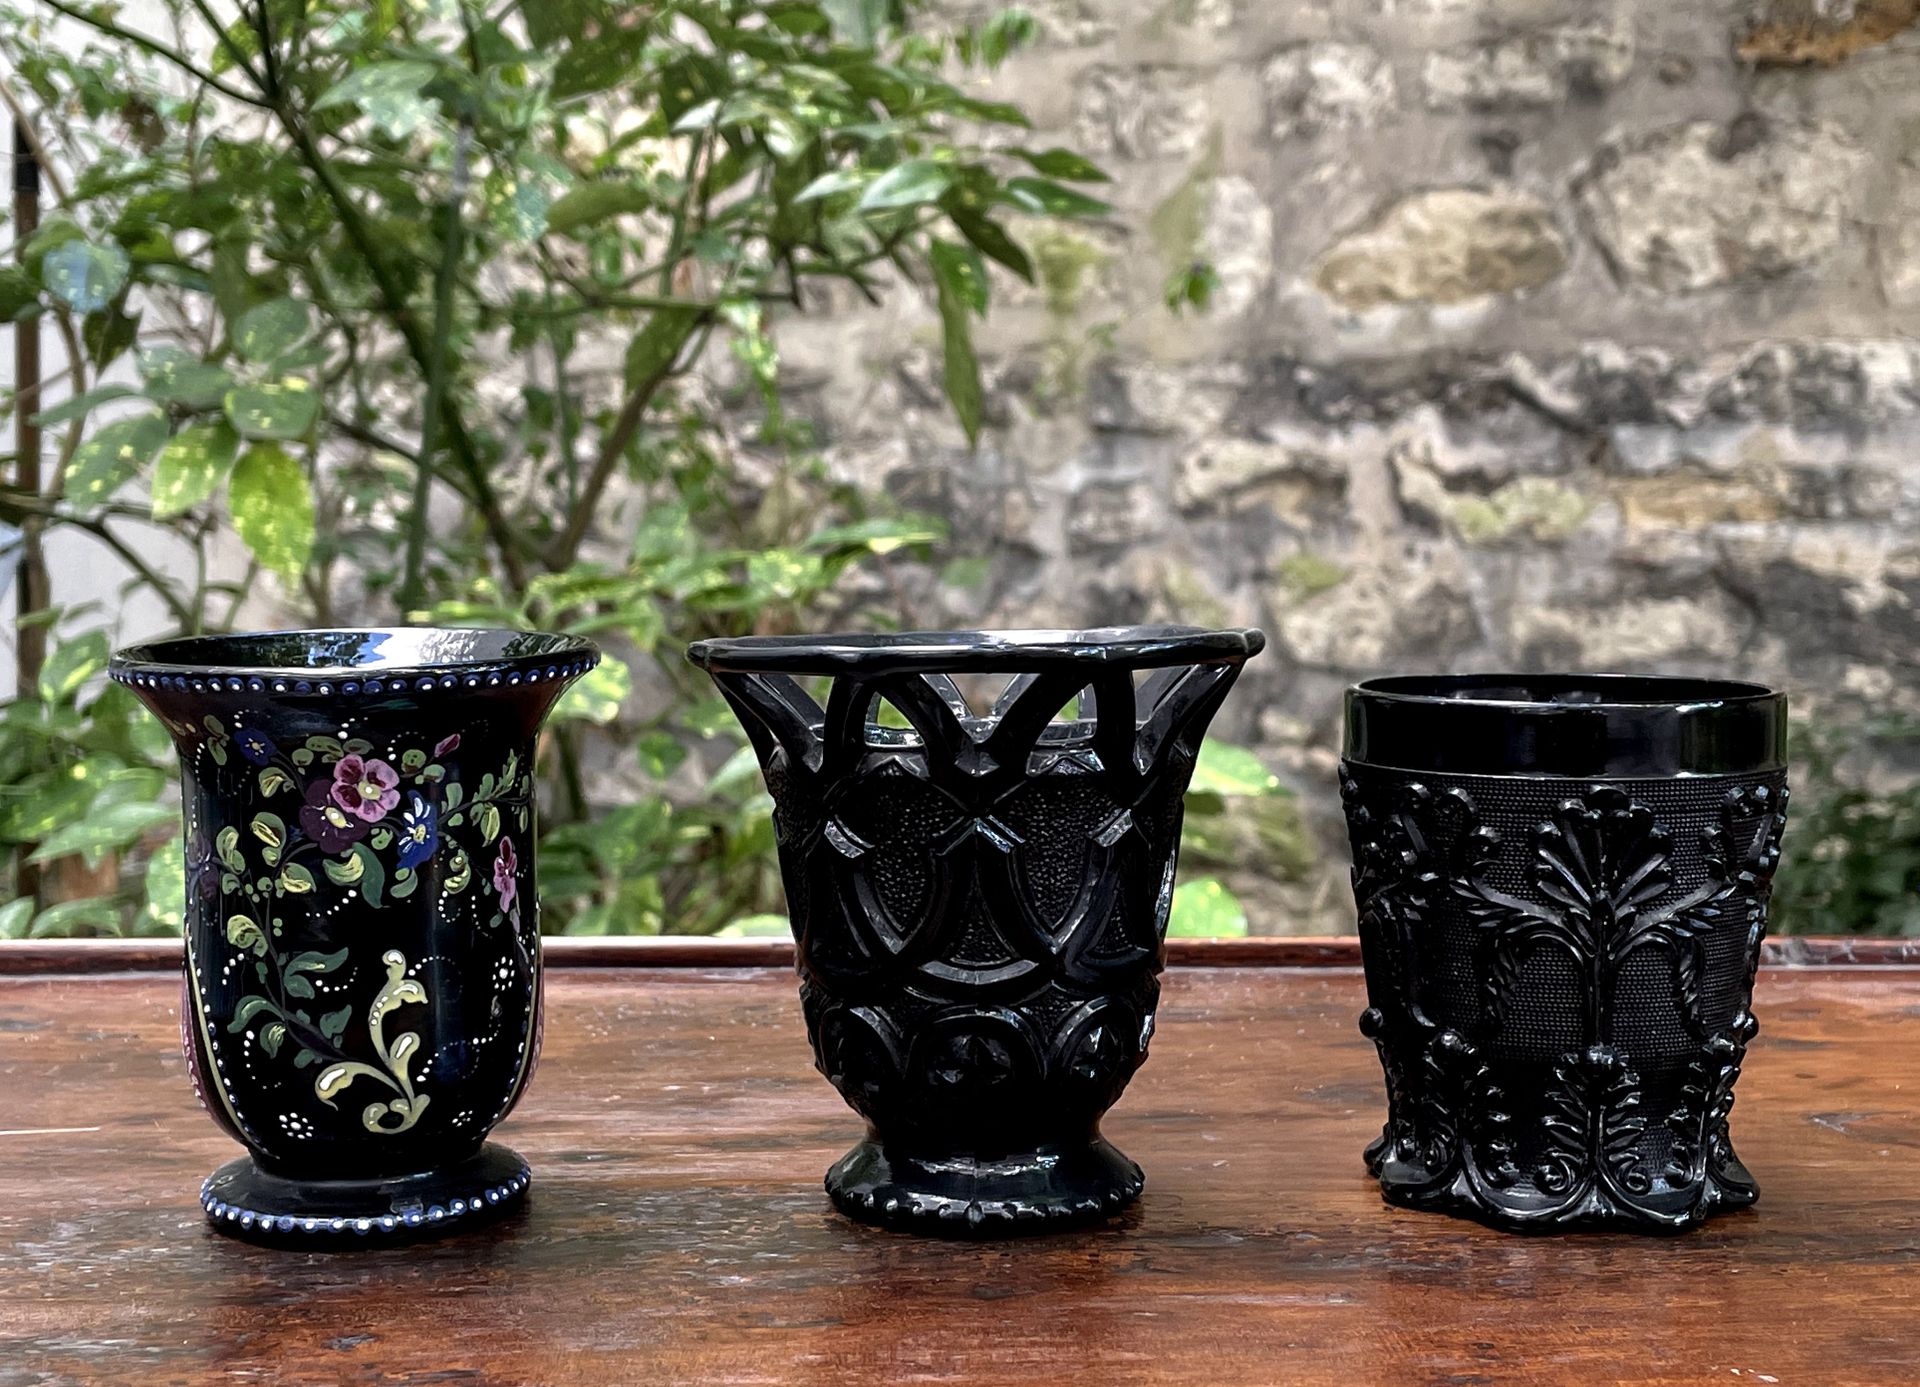 Null 一套三个黑色压制玻璃杯。 

一个是彩绘花，一个是刺桐叶，最后一个是镂空的几何图案。

19世纪

H.9,3 cm

H.9.4厘米

H.8.4厘&hellip;